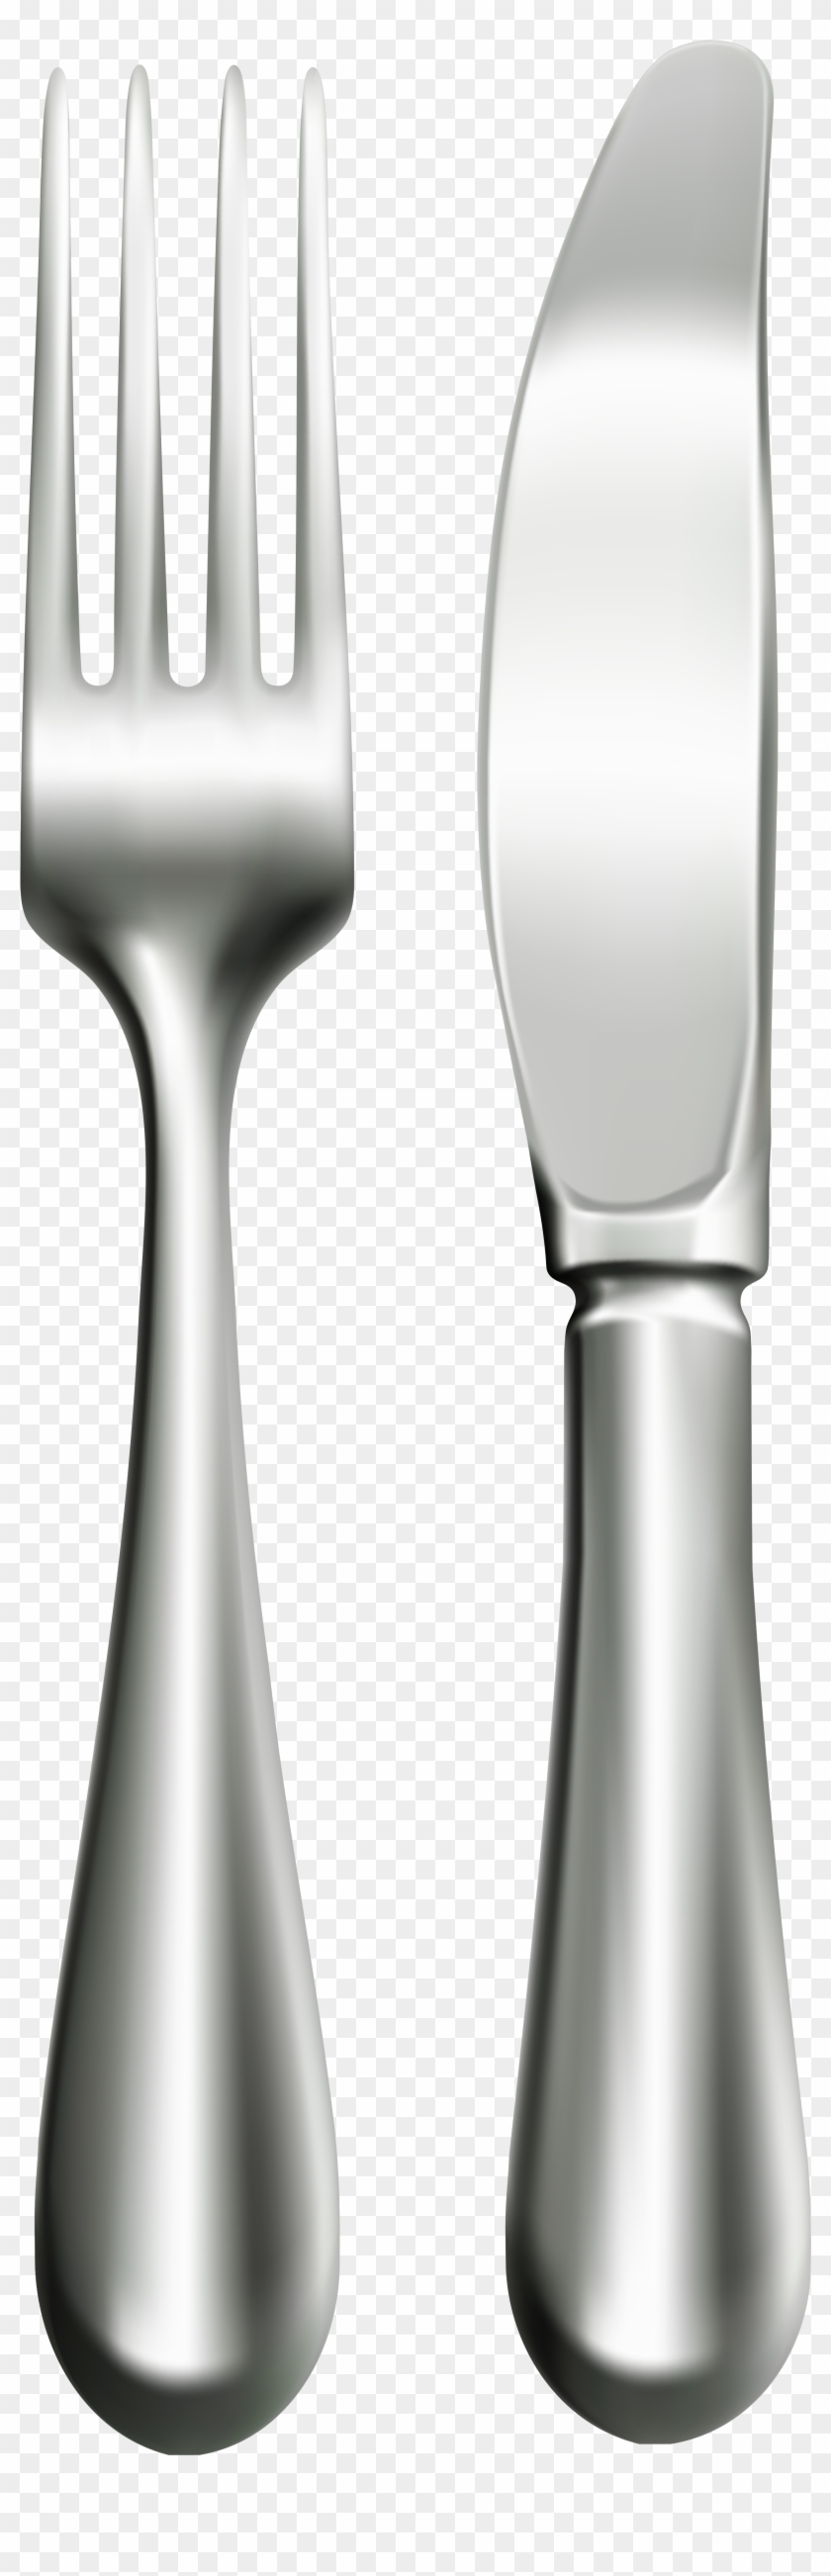 Fork And Knife Png Clip Art - Clip Art #8673